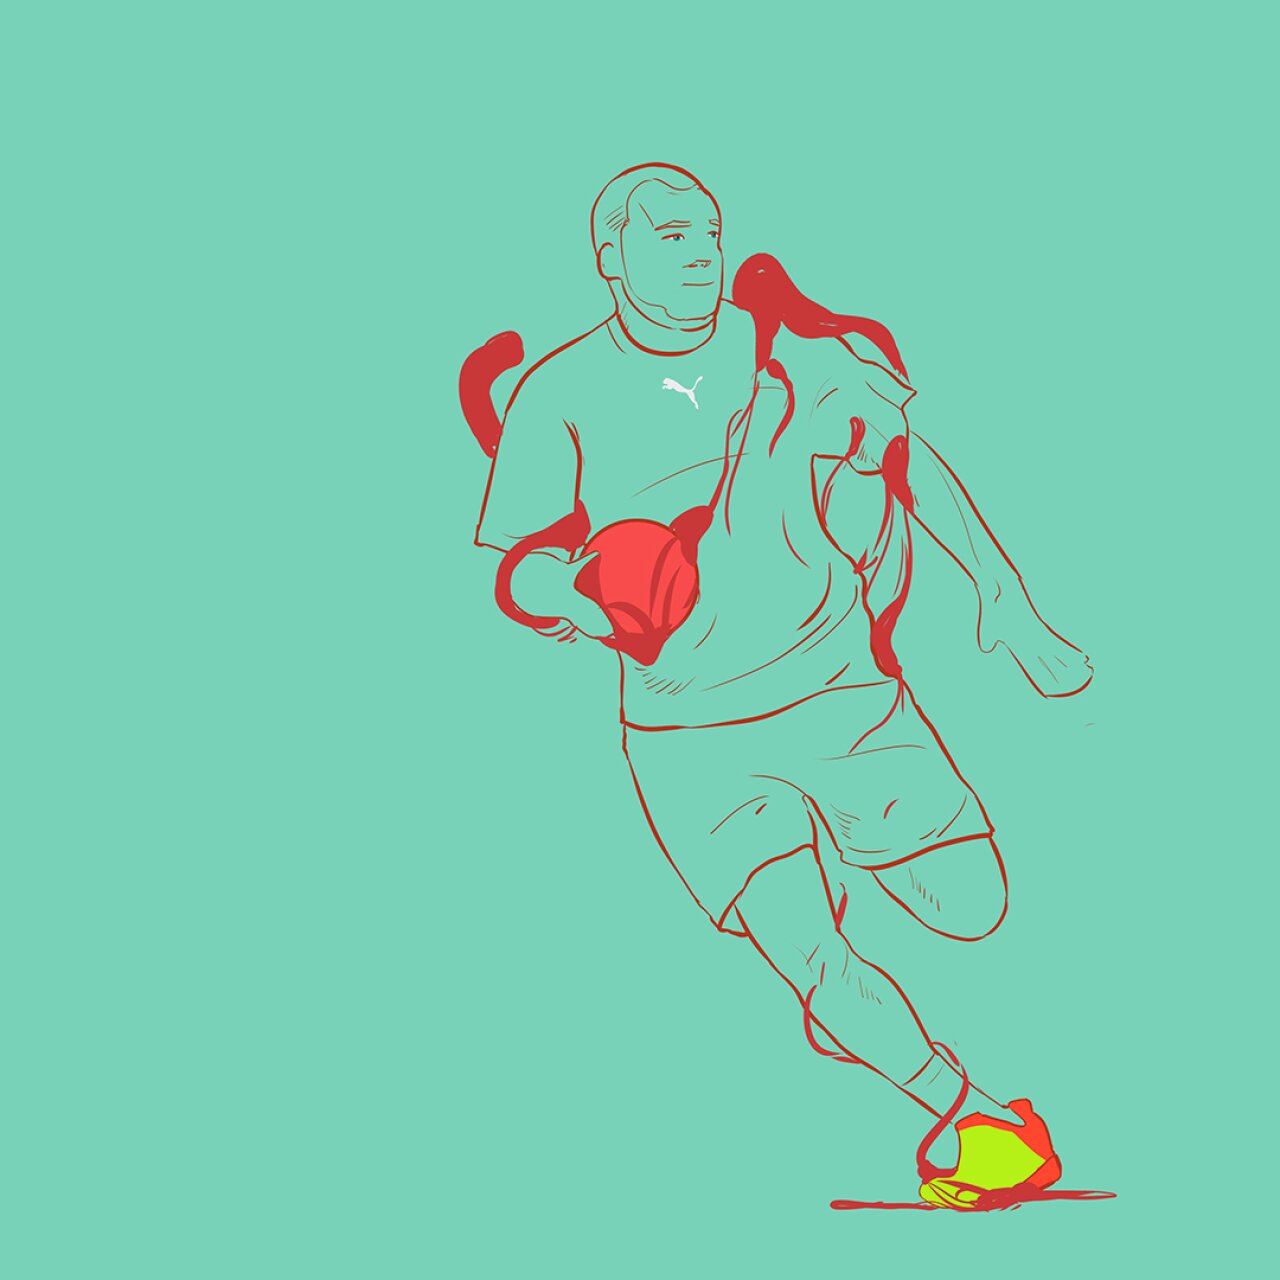 sato-creative-studio-art-japan-paris-puma-handball-amir-mirzaei-animation-illustration-2D-sport.